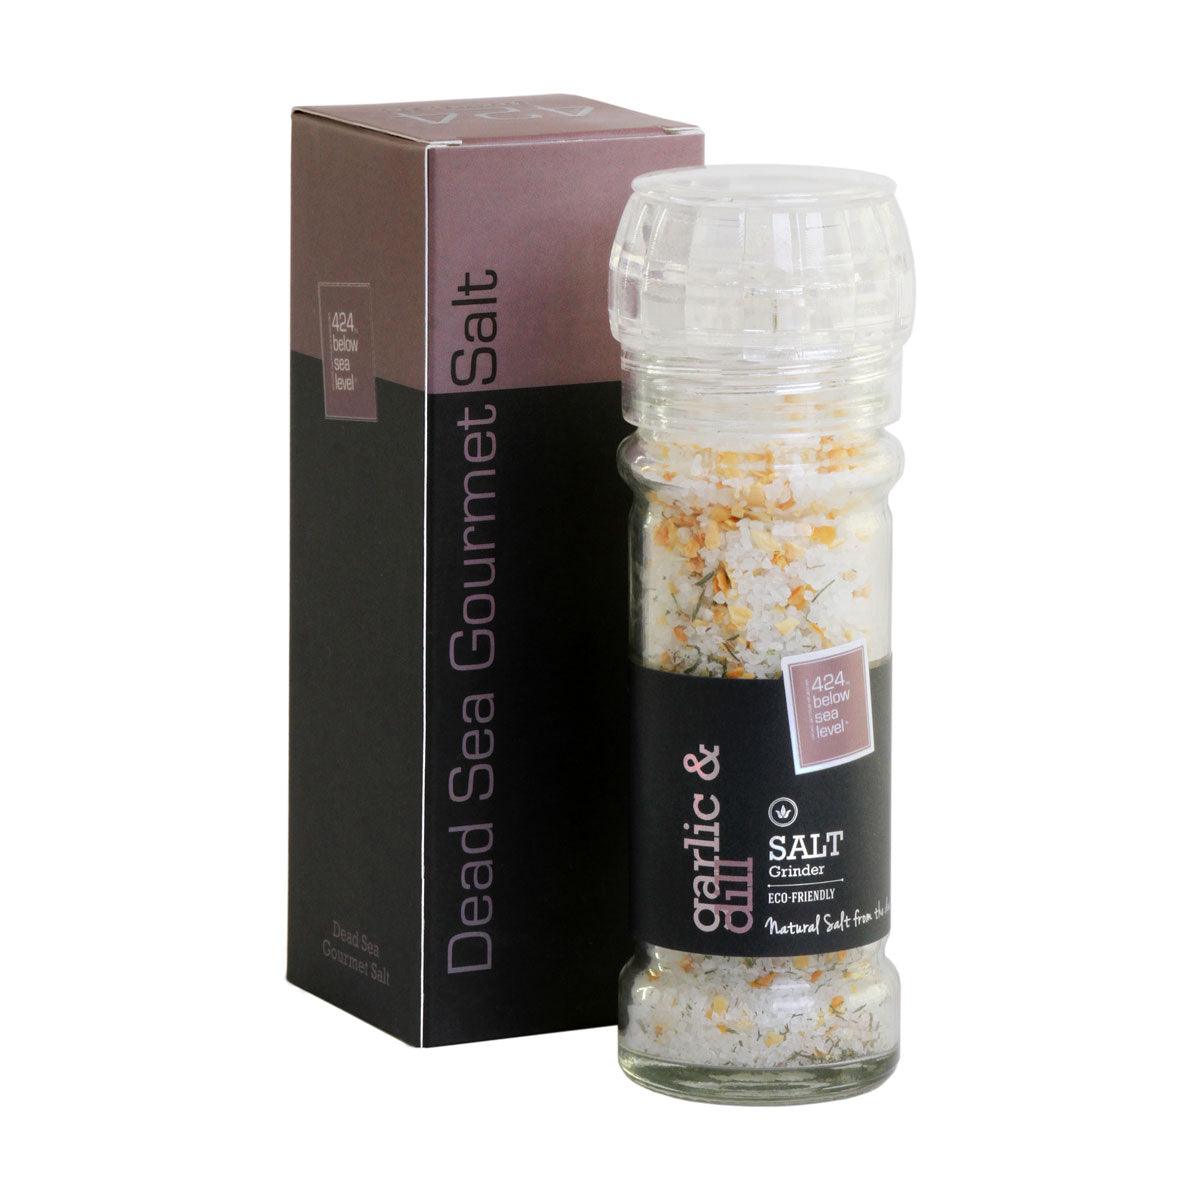 Platinum Garlic & Dill Salt Gourmet From The Dead Sea 3.87oz / 110 grams - Spring Nahal